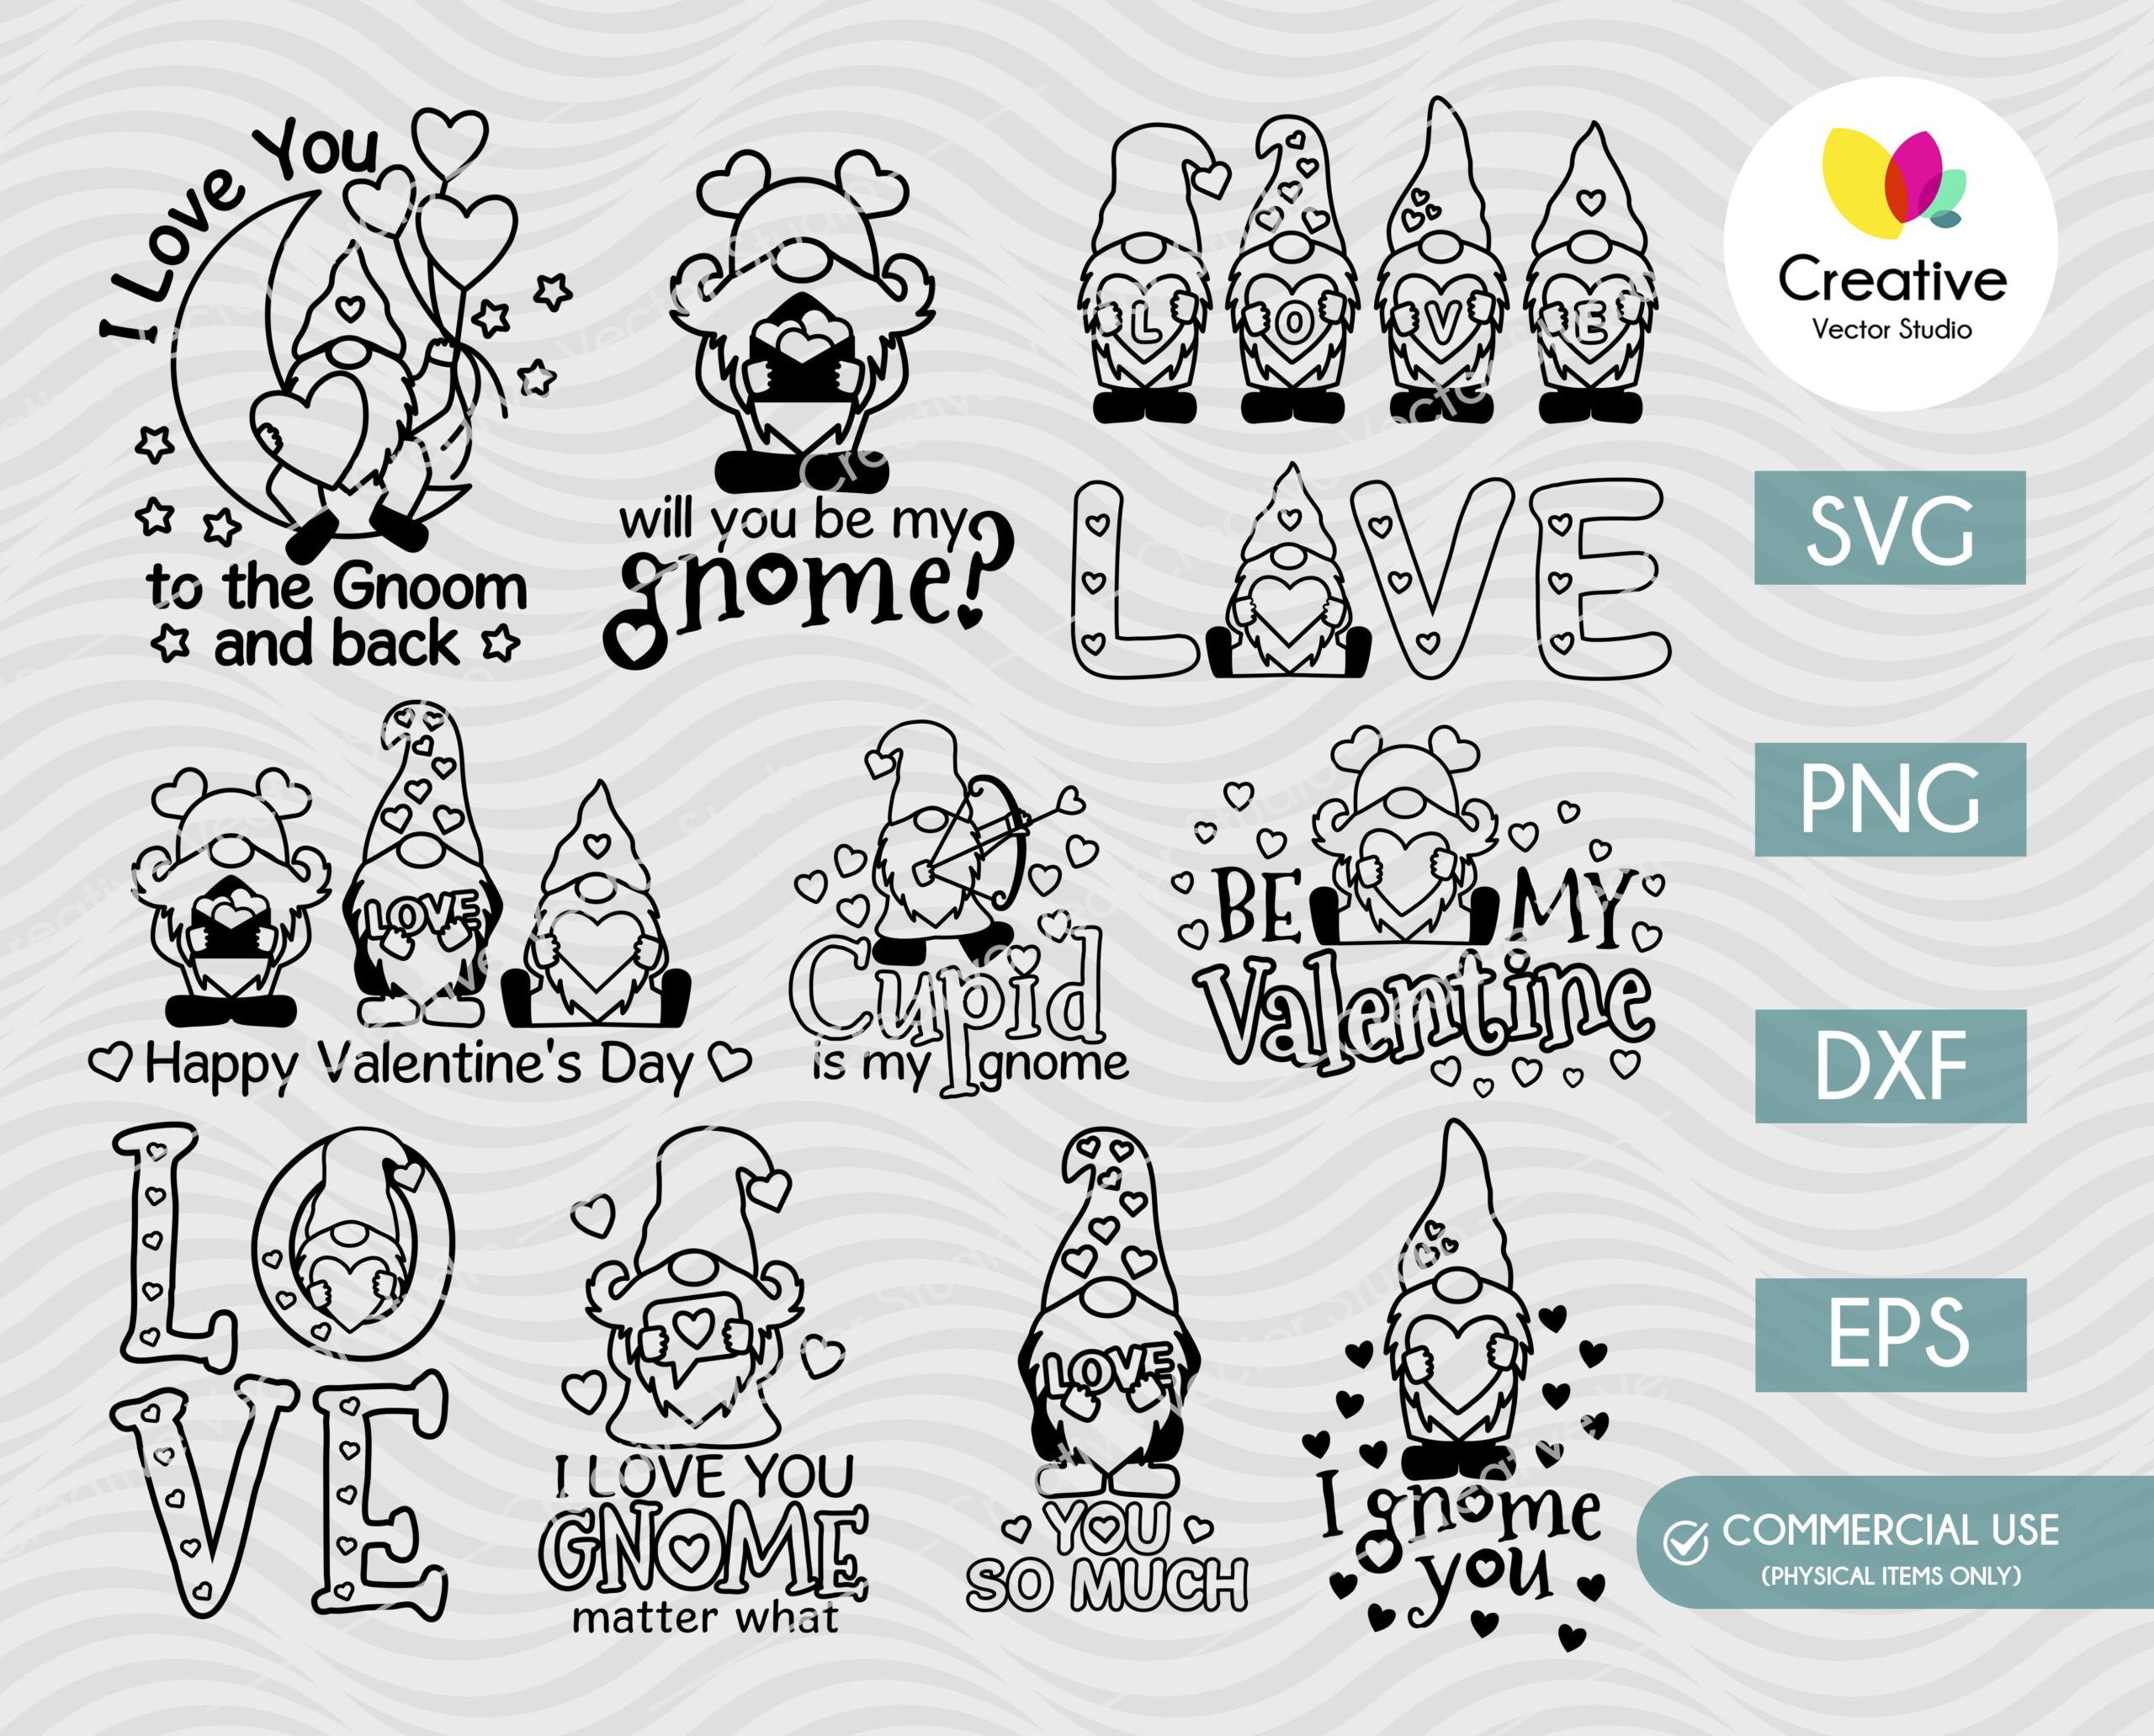 Valentine Gnomes SVG, PNG, DXF, EPS - Creative Vector Studio